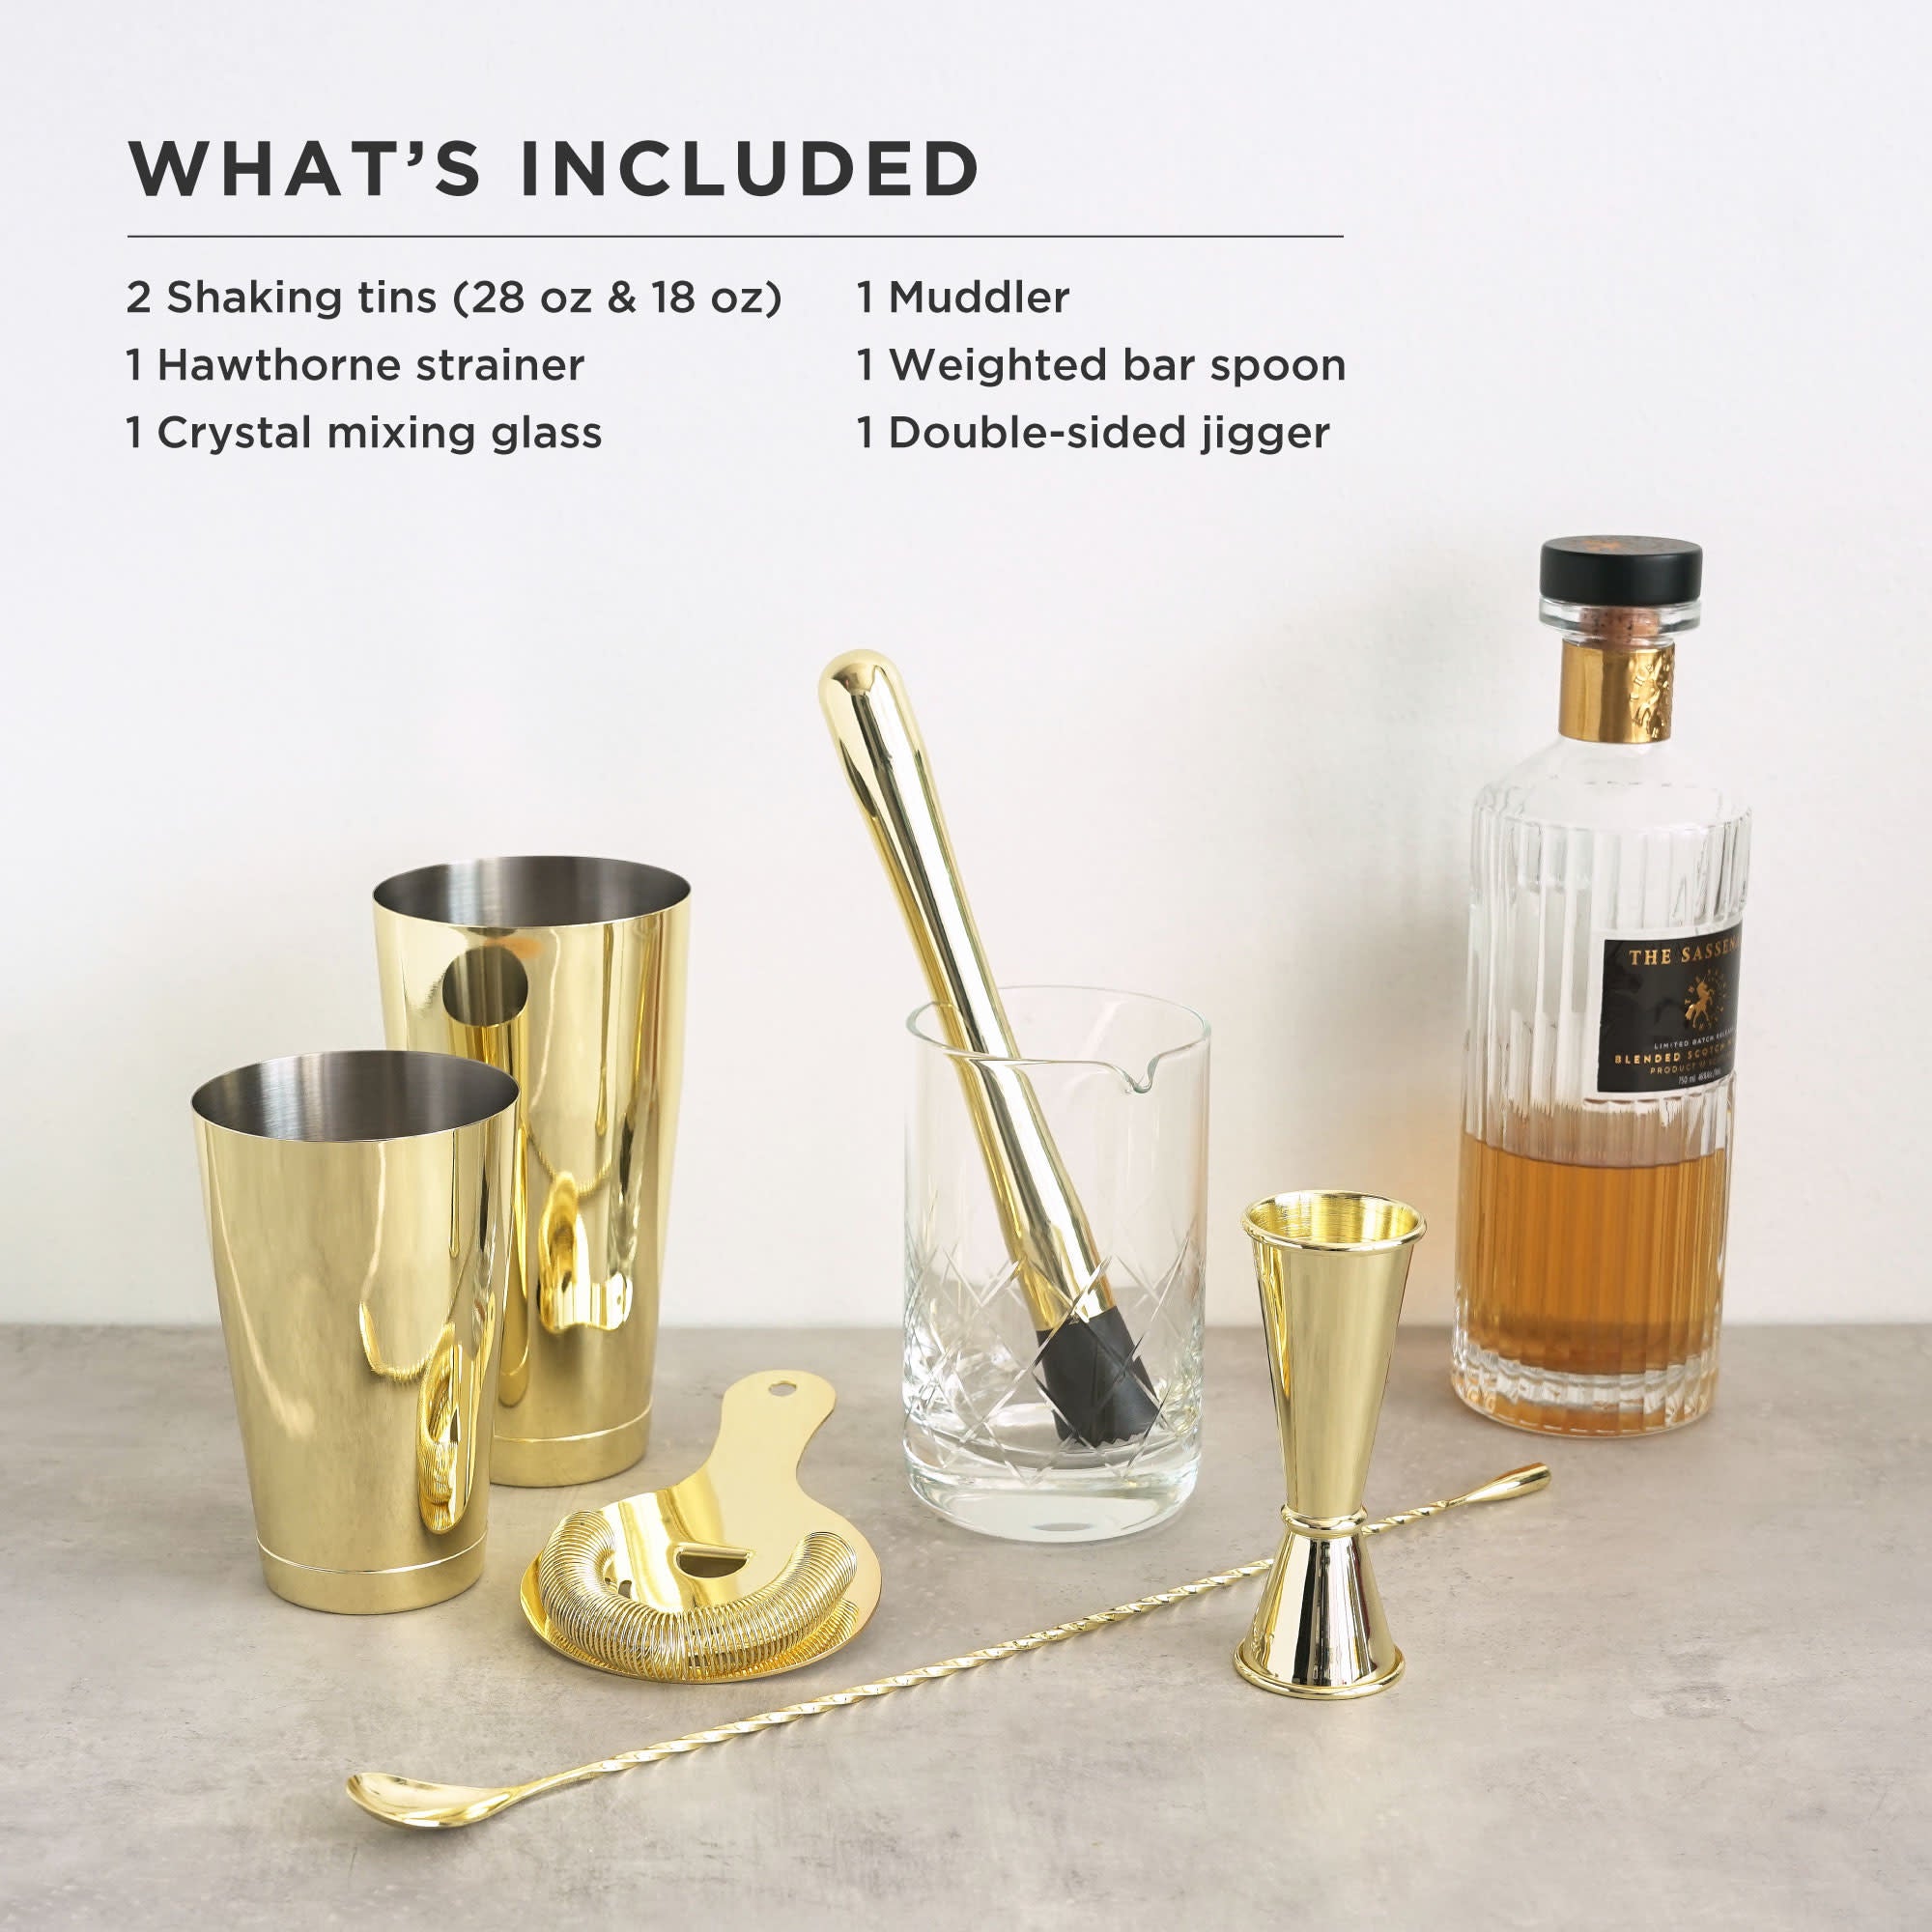 10-in-1 Cocktail Shaker Set - Bar Tools Cocktail Making Kit, Gold